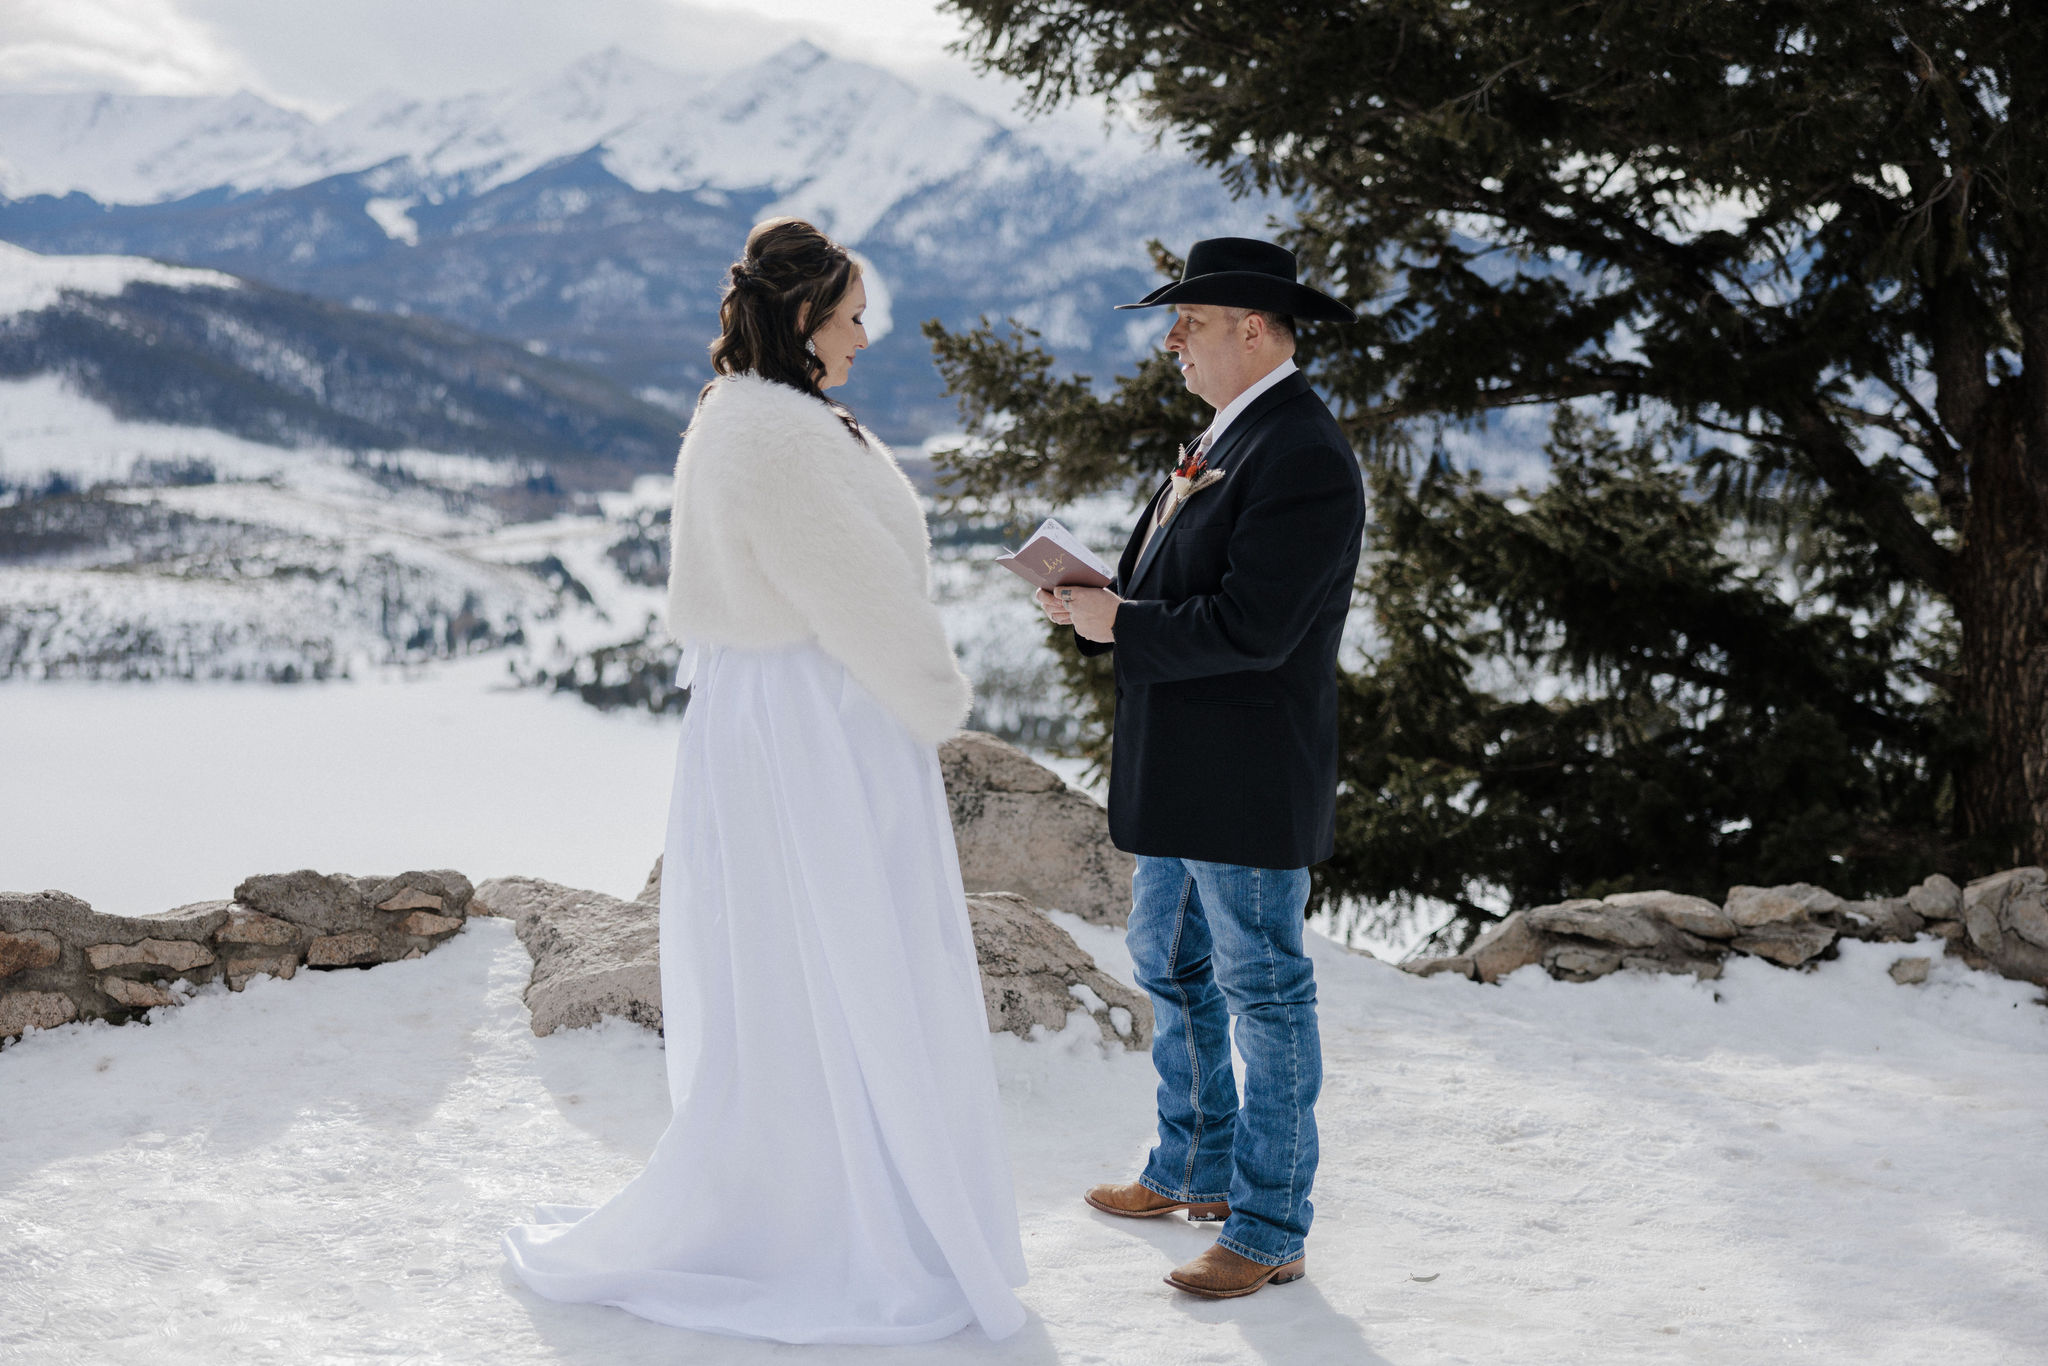 Groom recites vows during scenic Colorado outdoors elopement.